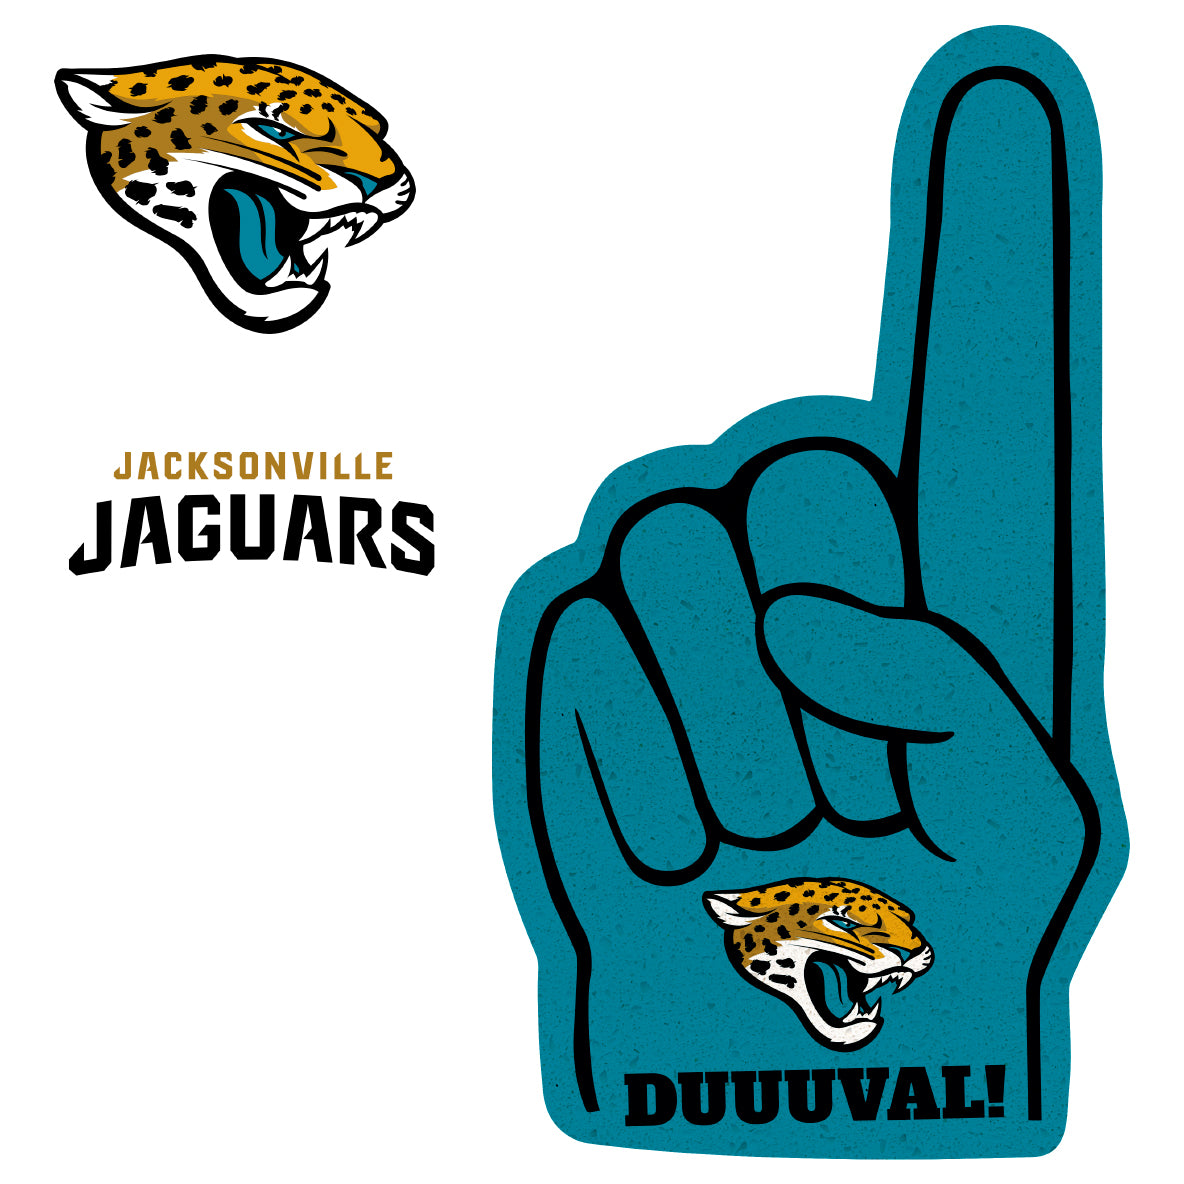 Jacksonville Jaguars: 2021 Foam Finger - Officially Licensed NFL